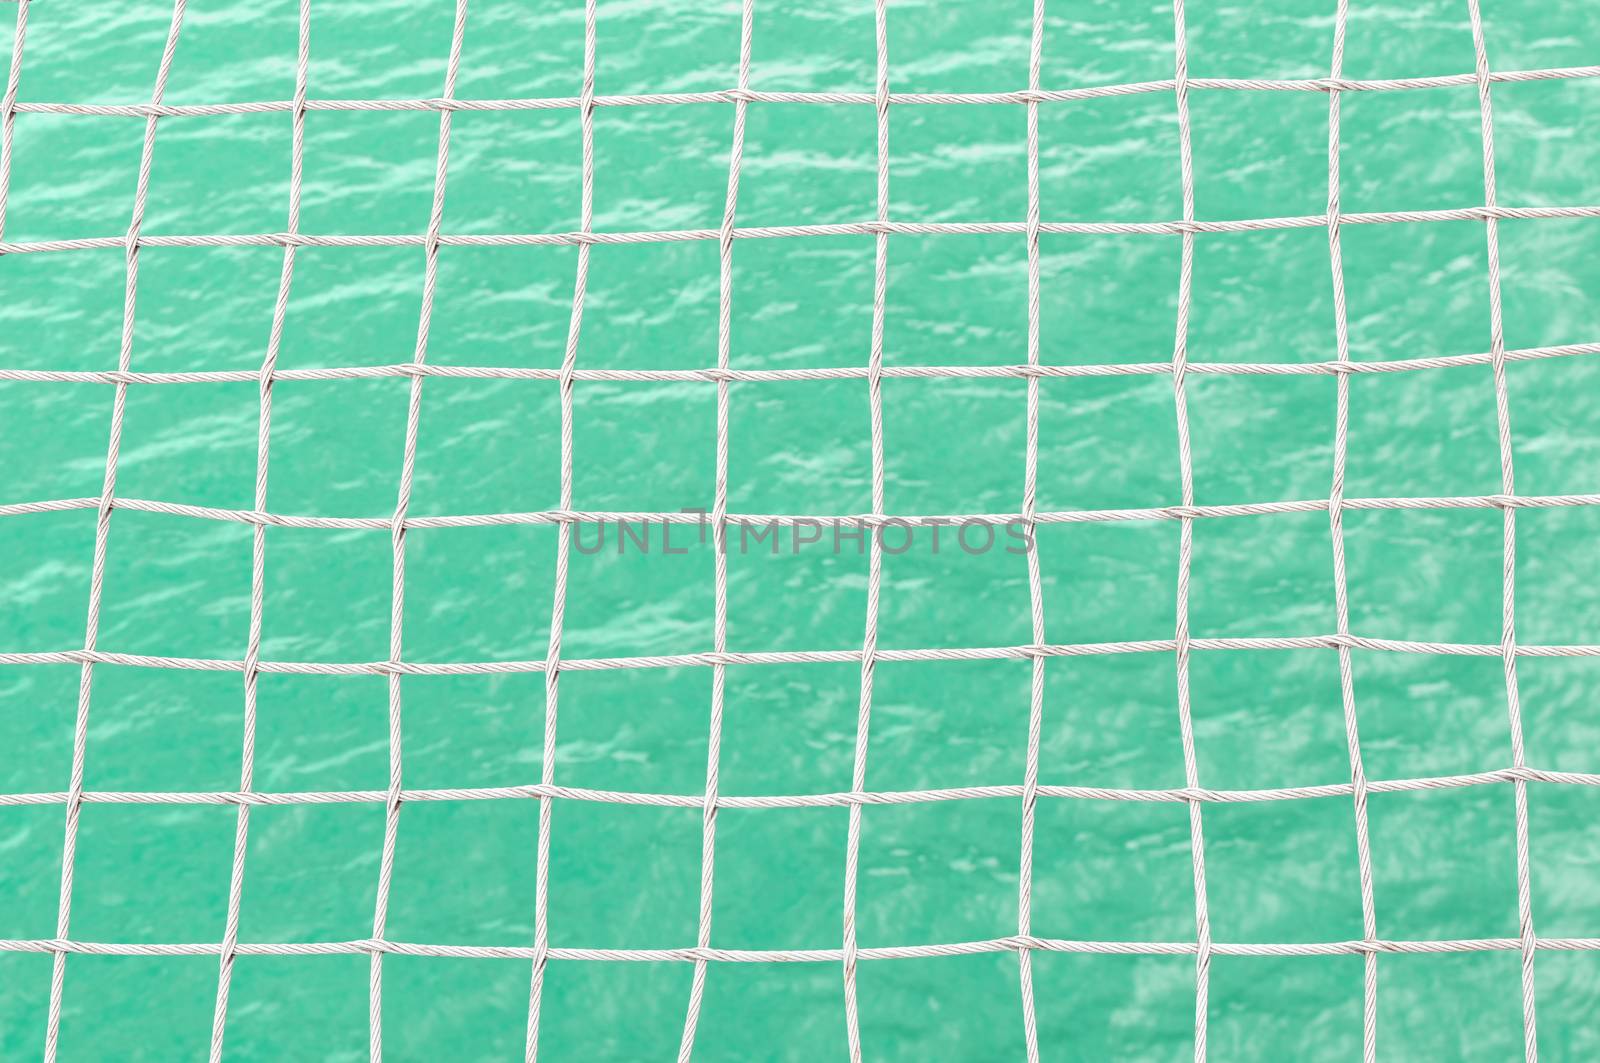 Texture water tight fishnet by Sorapop